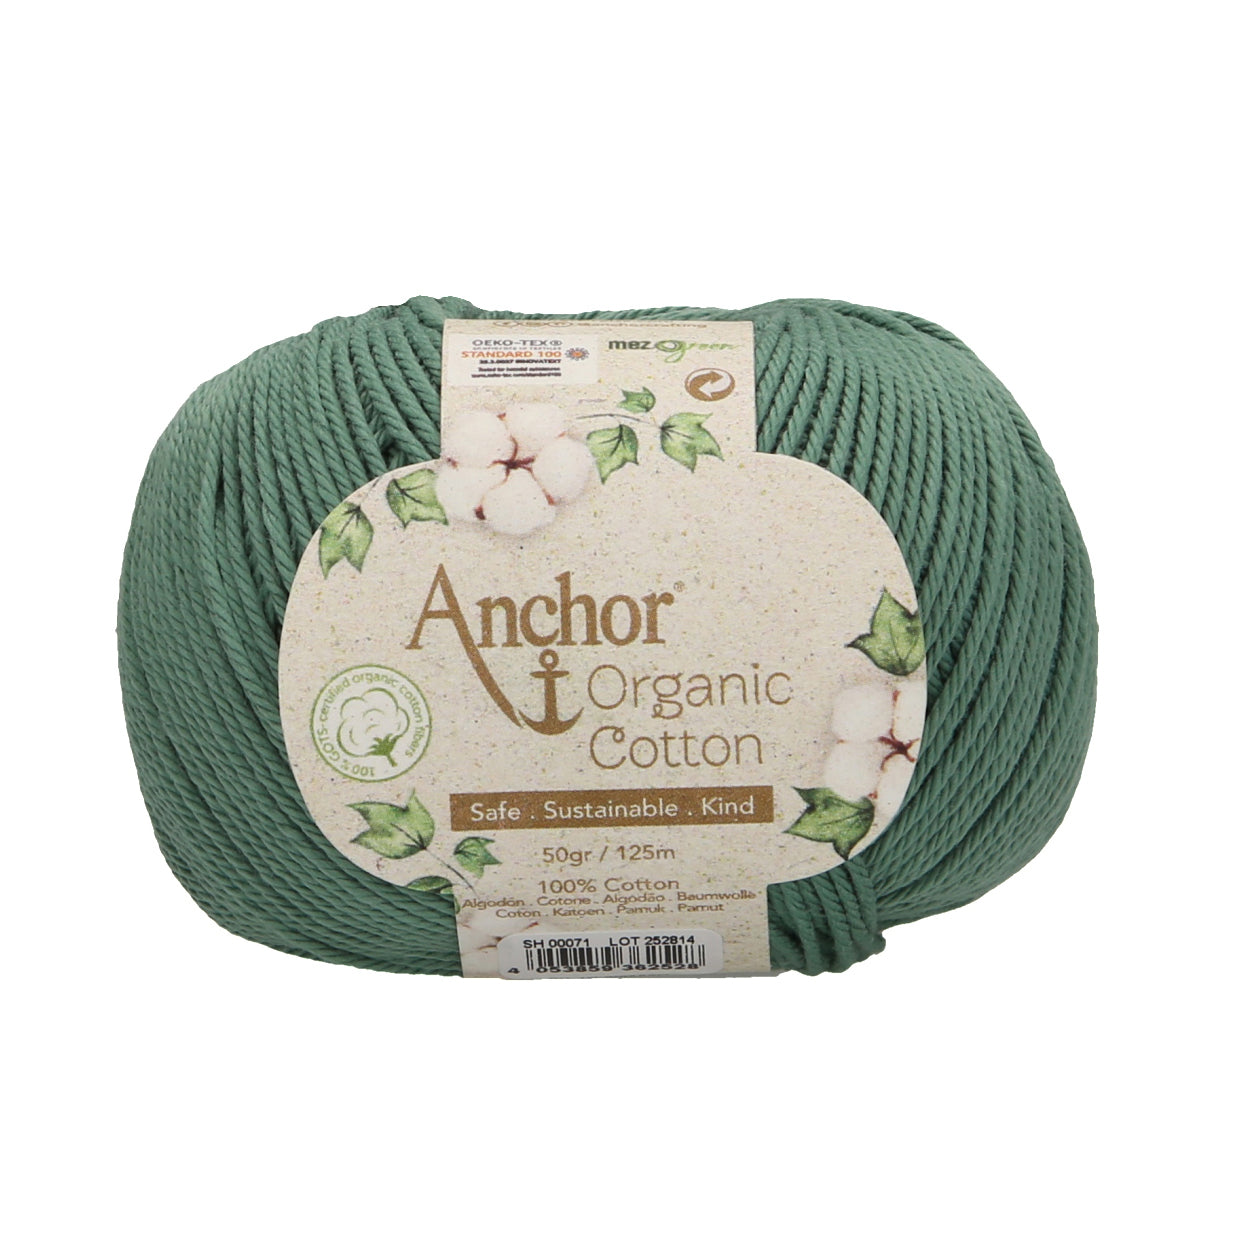 Anchor - Organic Cotton - 50g Ball - Emerald Lake